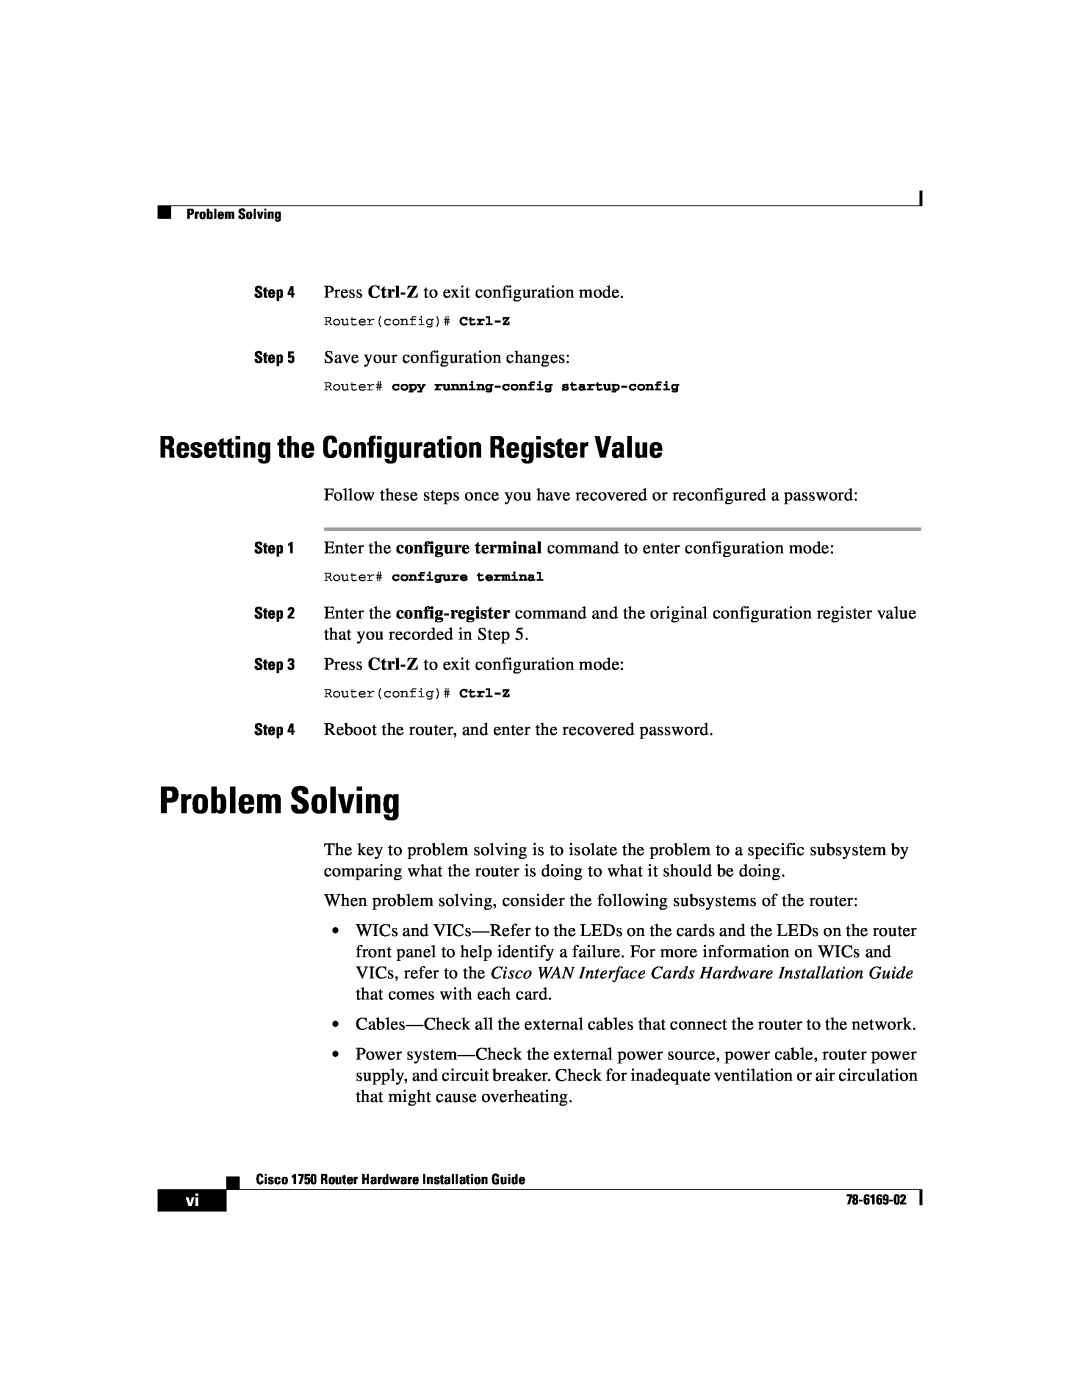 Cisco Systems CISCO1750 manual Problem Solving, Resetting the Configuration Register Value 